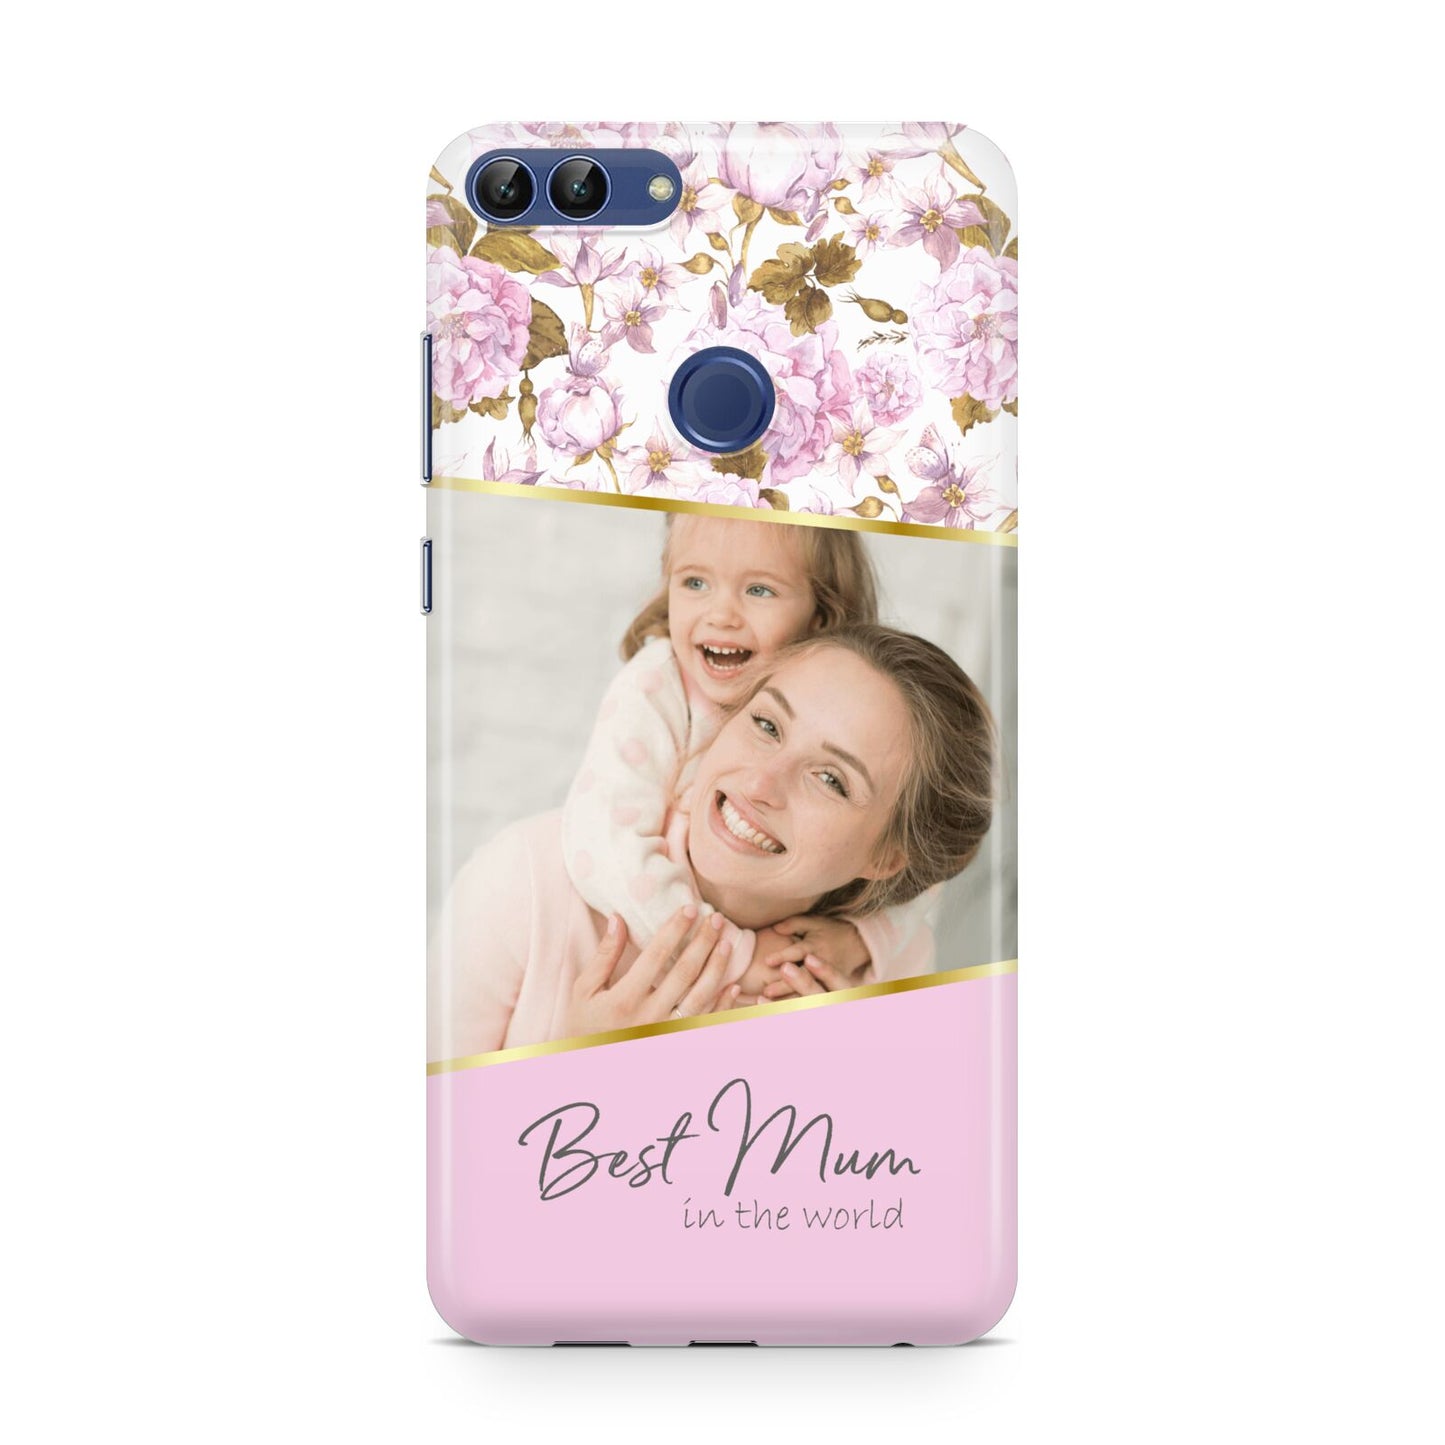 Personalised Love You Mum Huawei P Smart Case